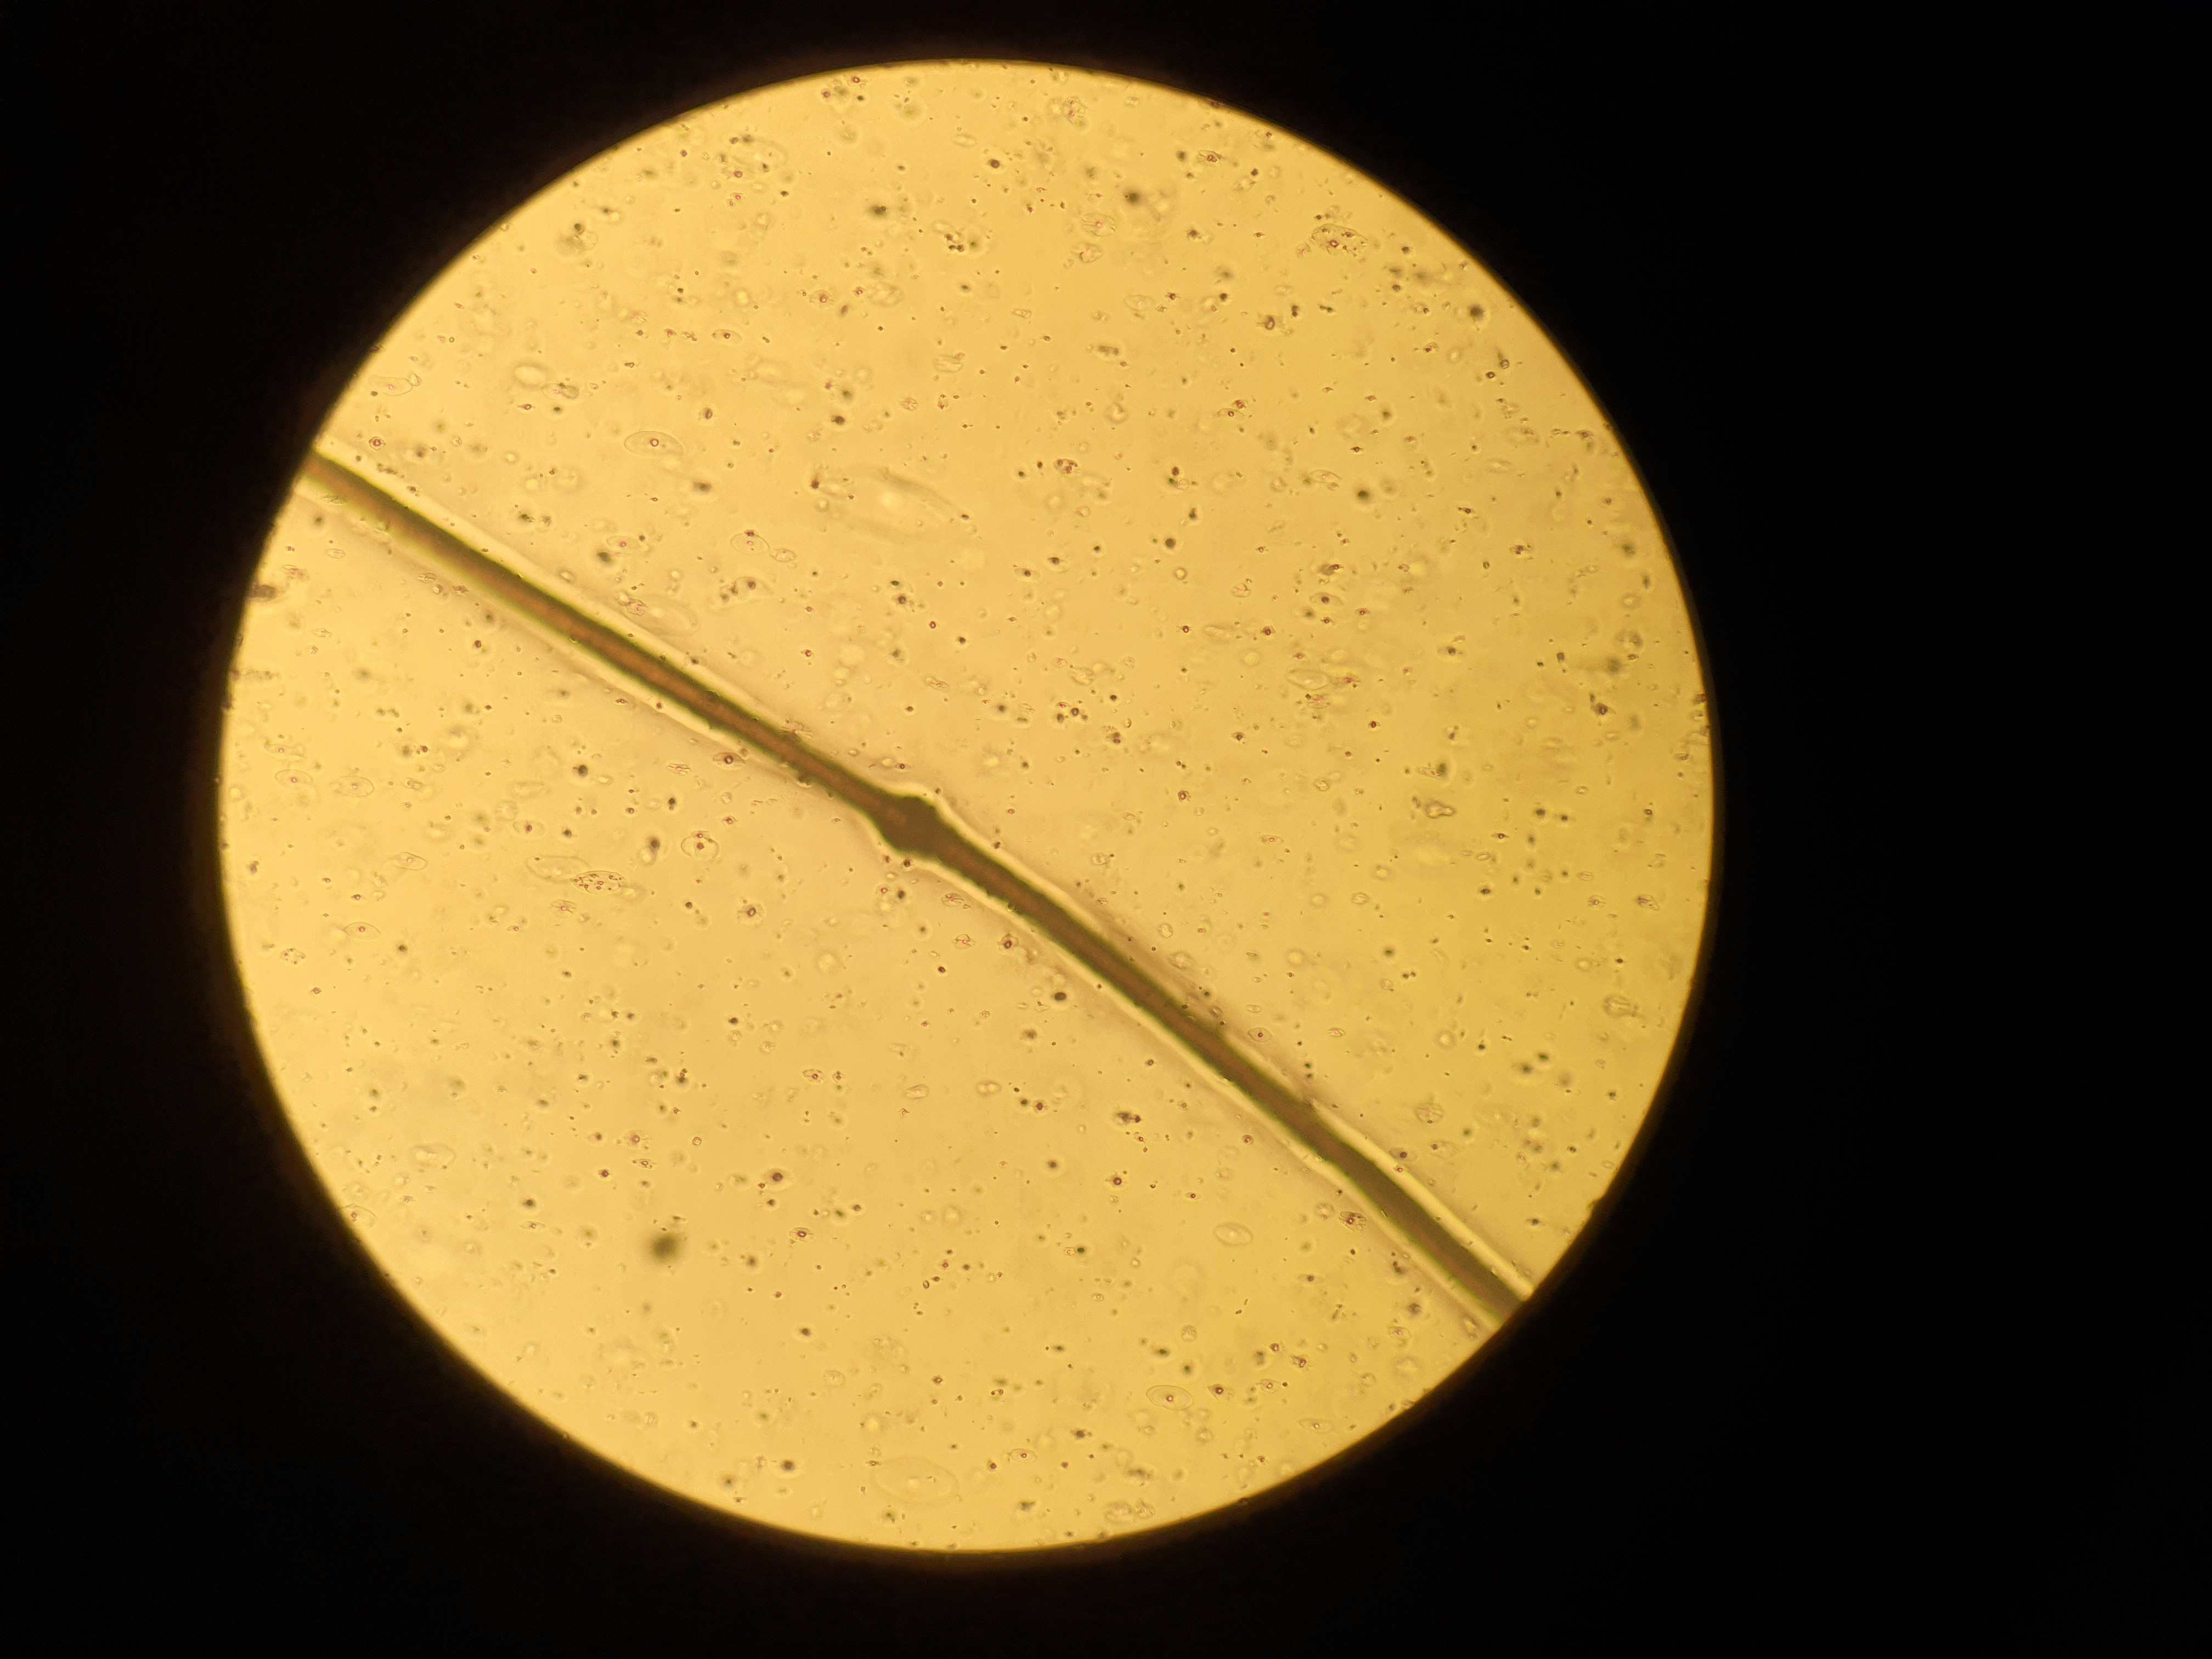 Hair microscopy shows node on the hair shaft (dry mount, ×400)